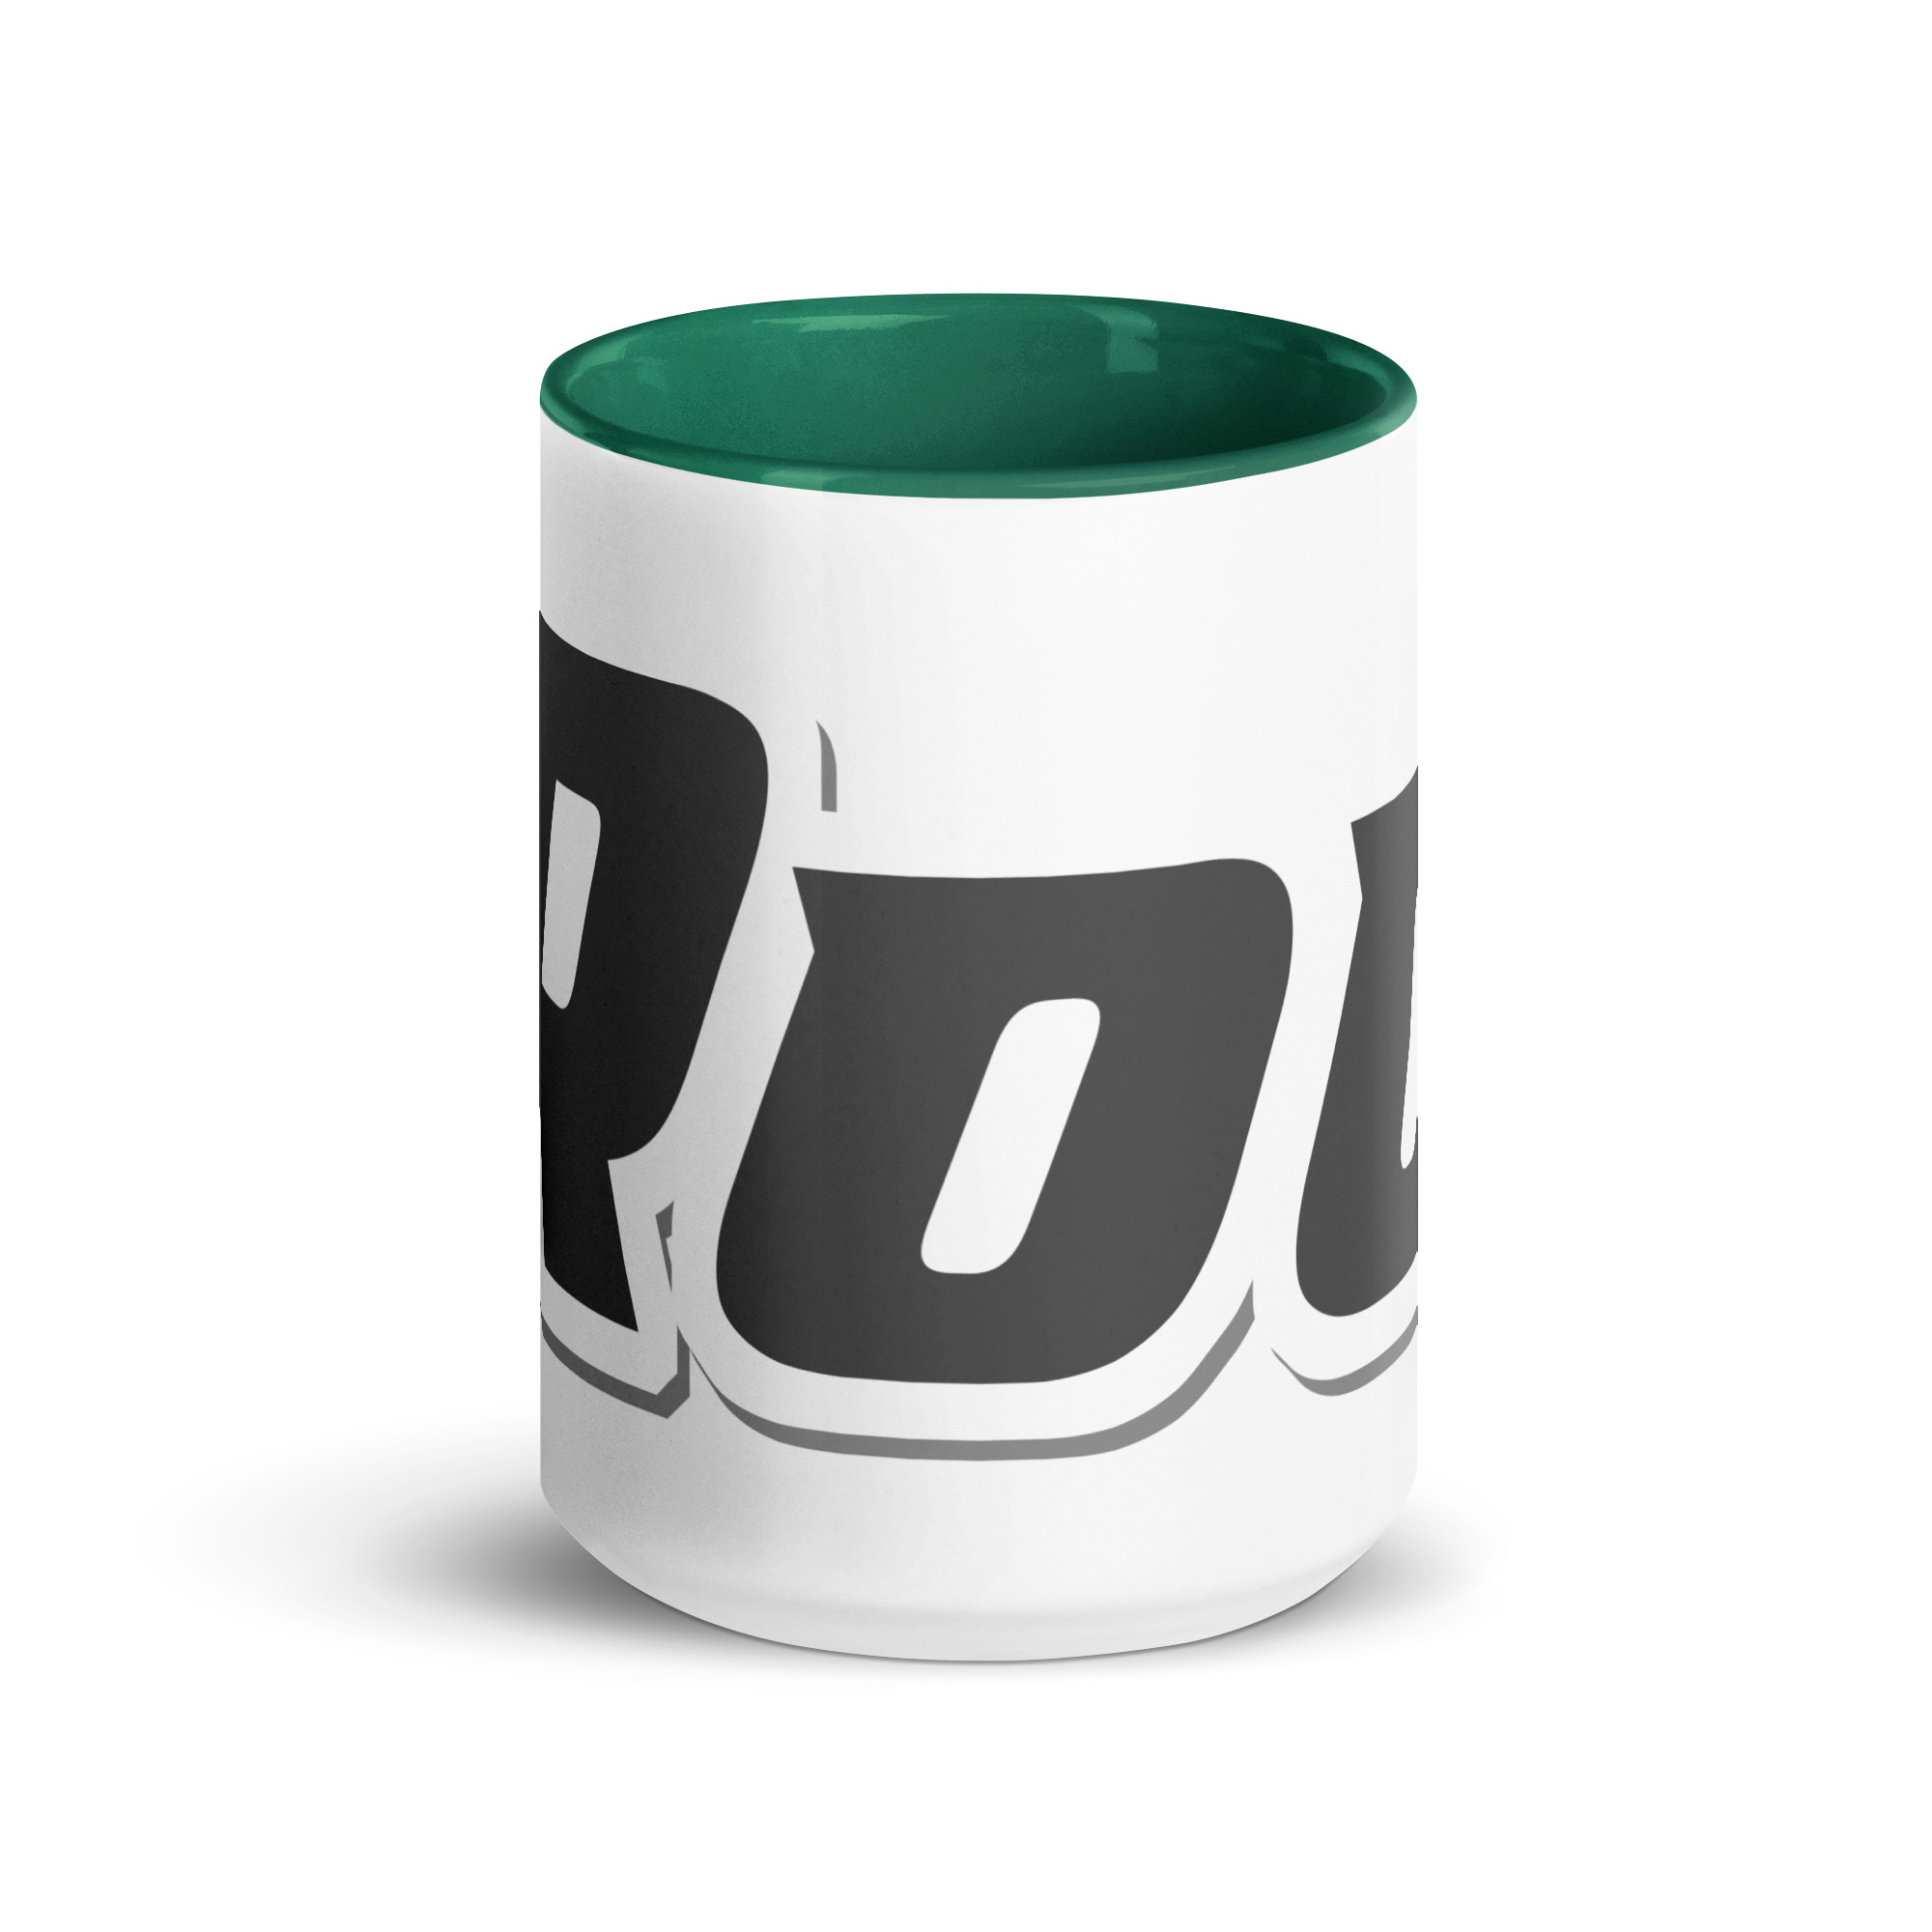 white-ceramic-mug-with-color-inside-dark-green-15-oz-front-6525b6484c57a.jpg